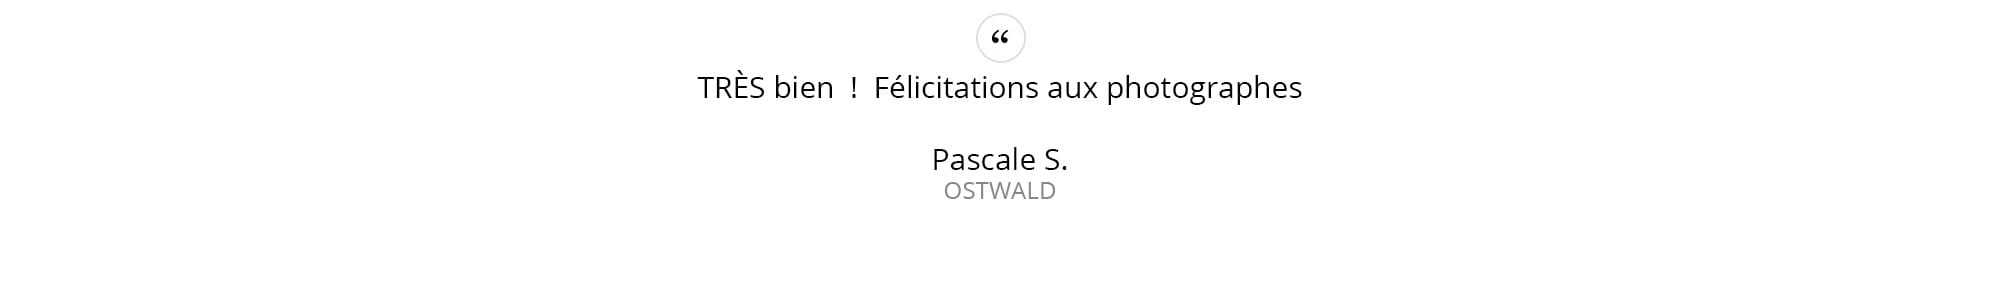 Pascale-S.---OSTWALD